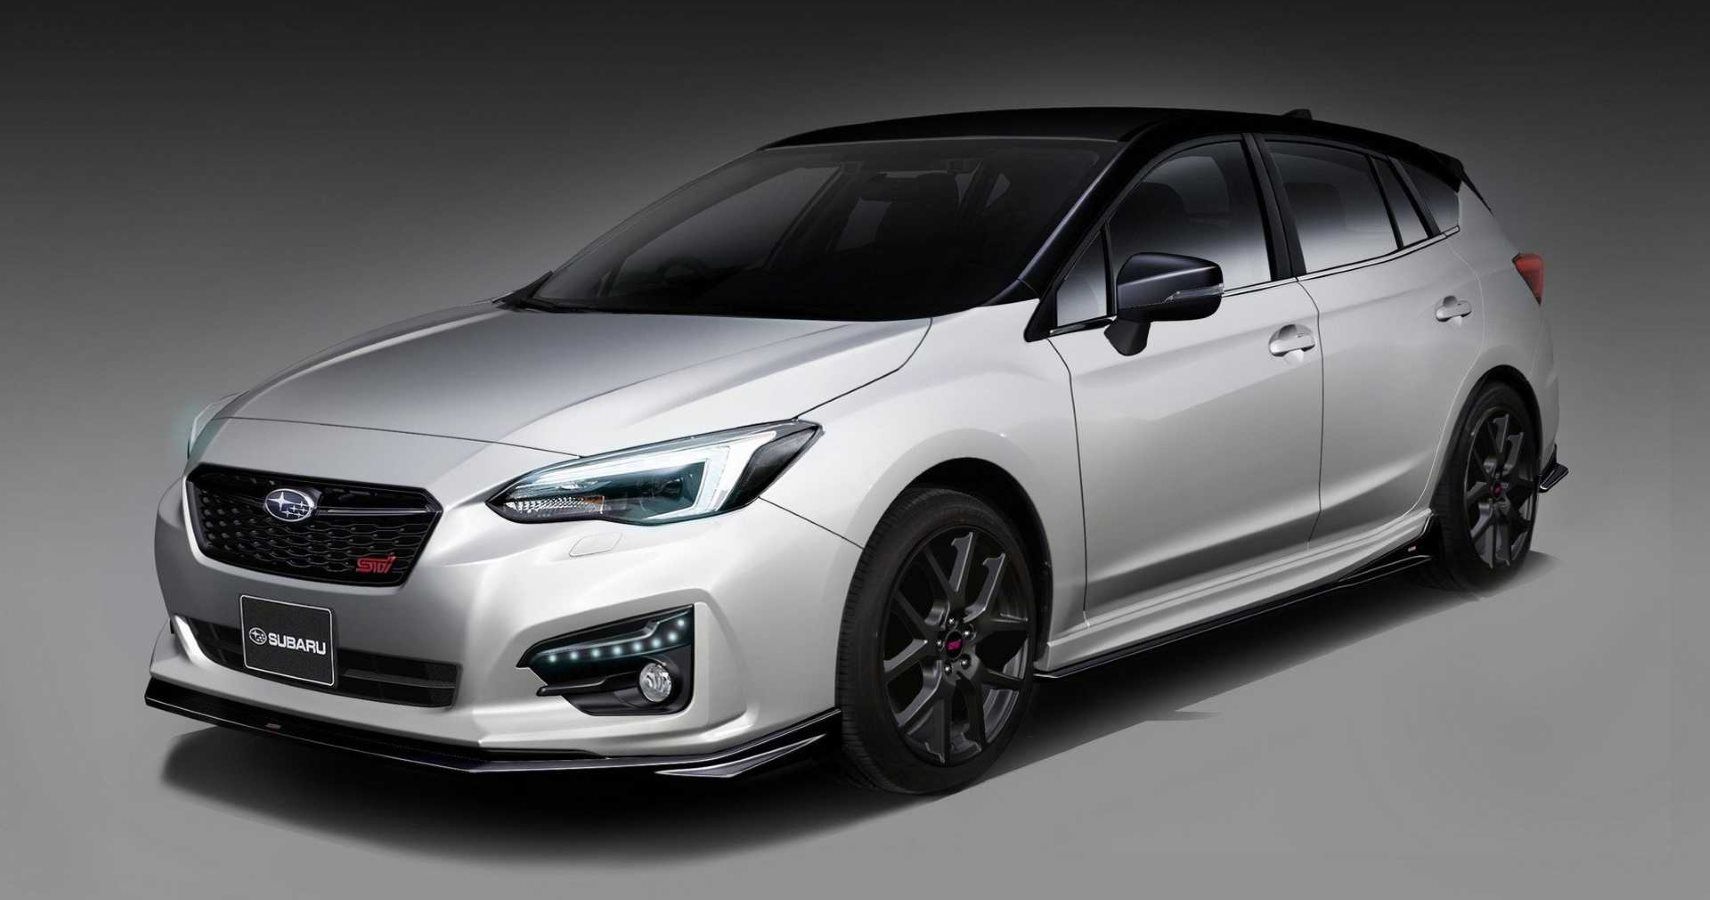 Subaru Impreza STI Concept Revealed Looking A Little Too 'Suburban'